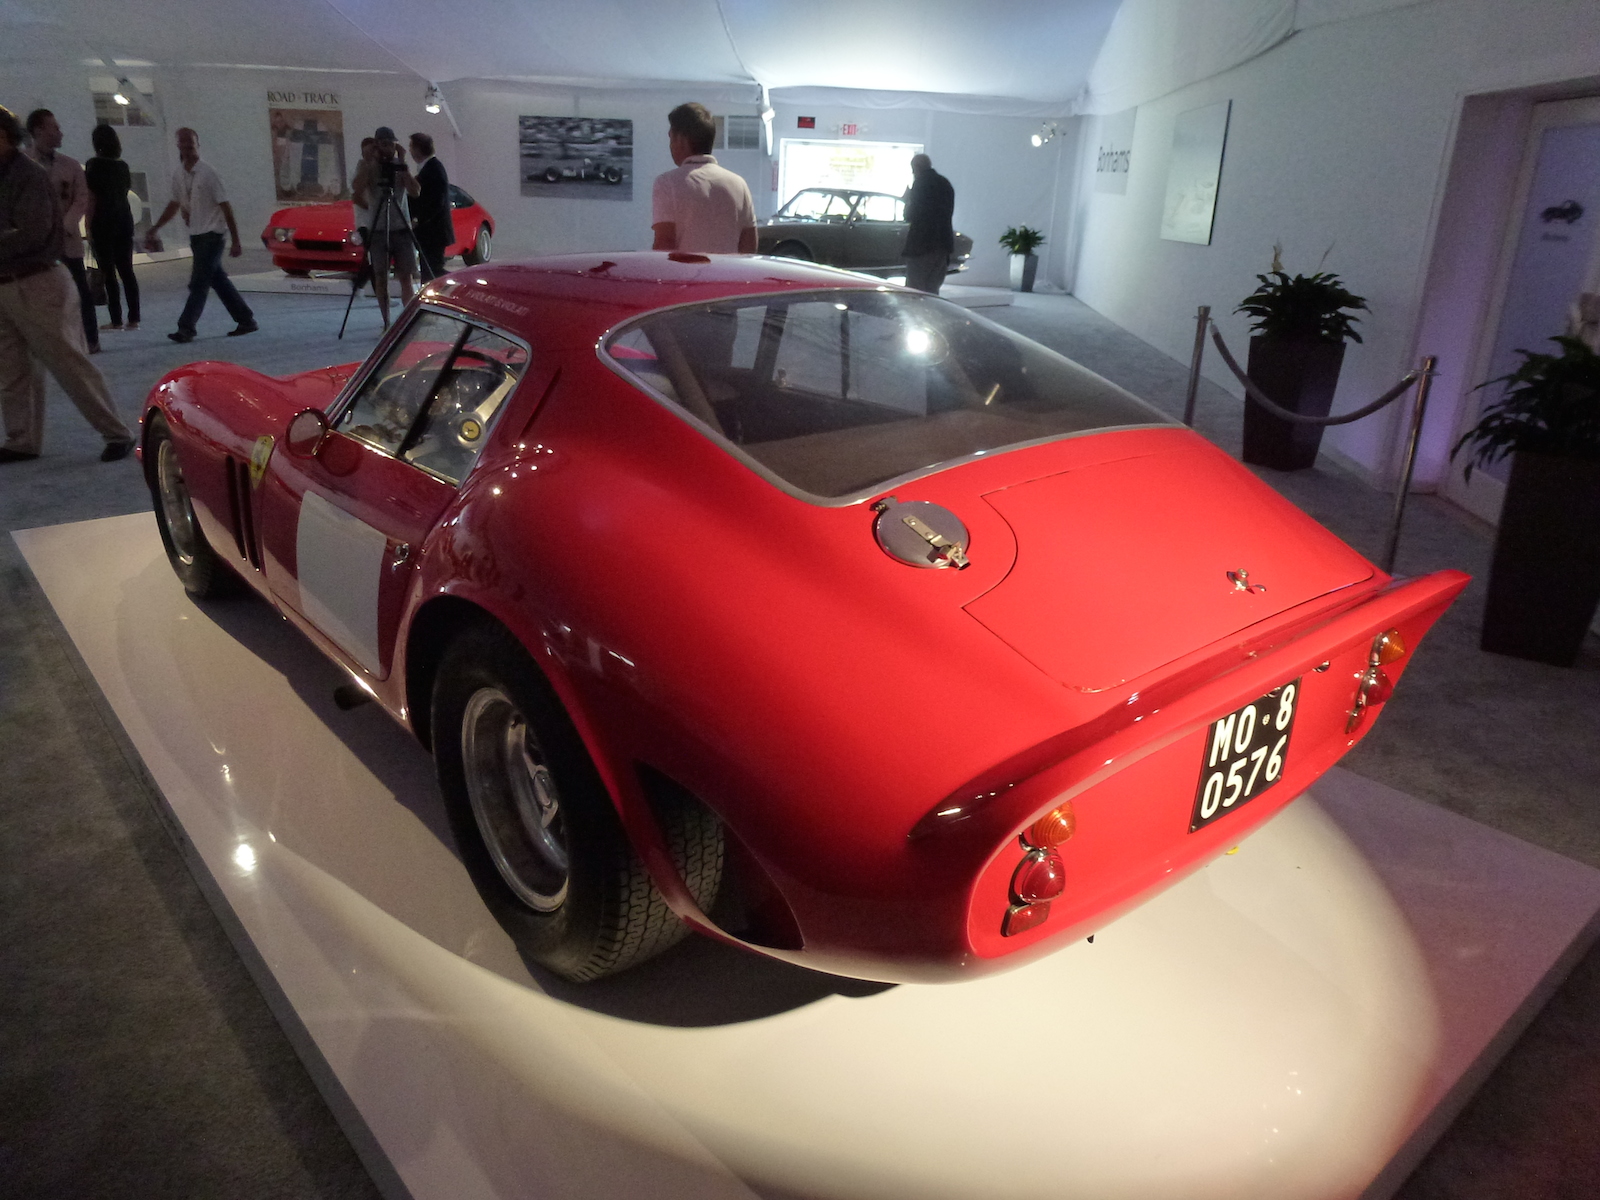 Ferrari 250 GTO - Sold for US$ 38,115,000 Including Premium